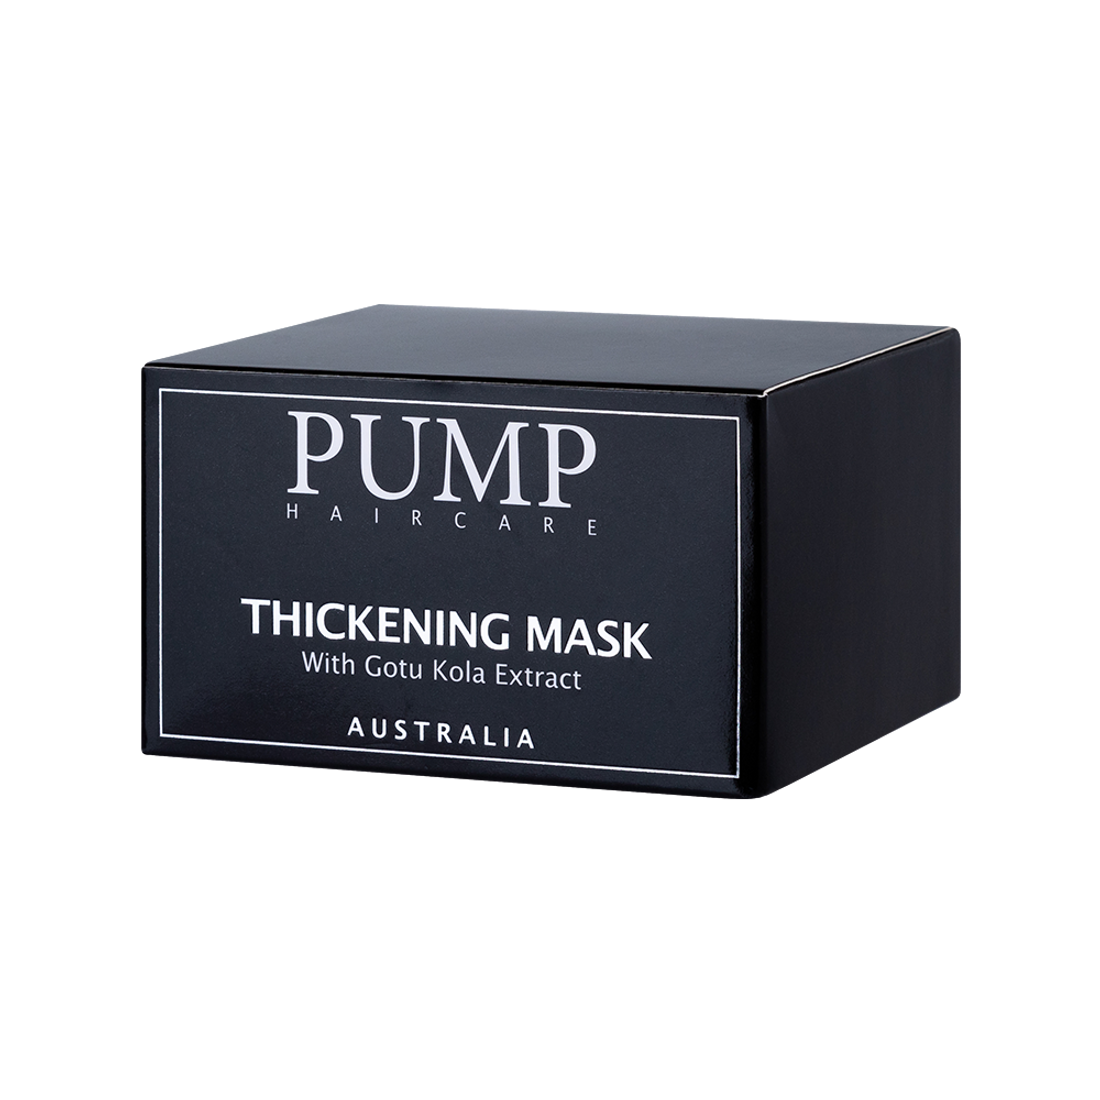 Pump Thickening Mask